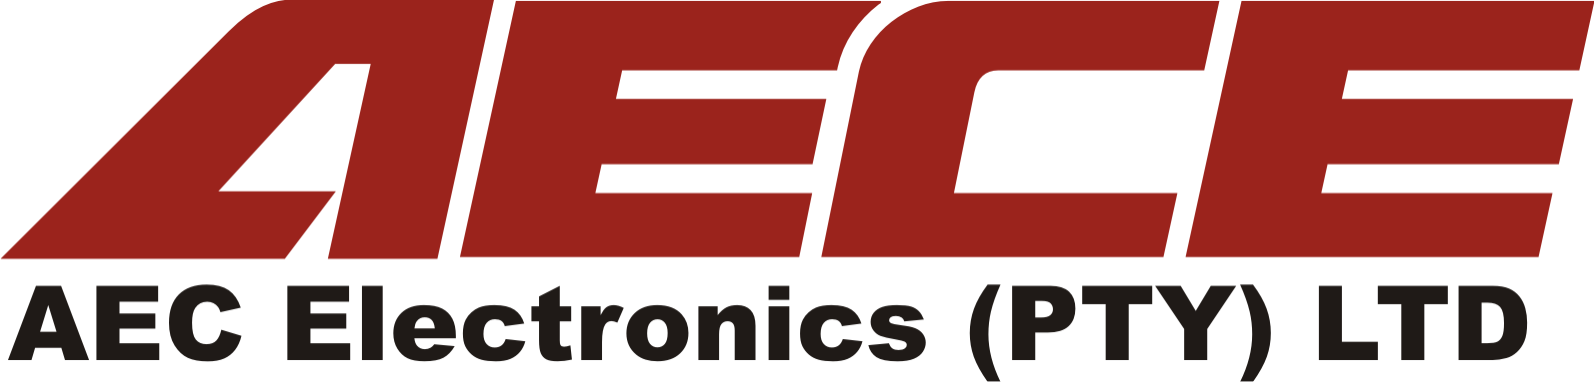 AEC Electronics (Pty) Ltd logo